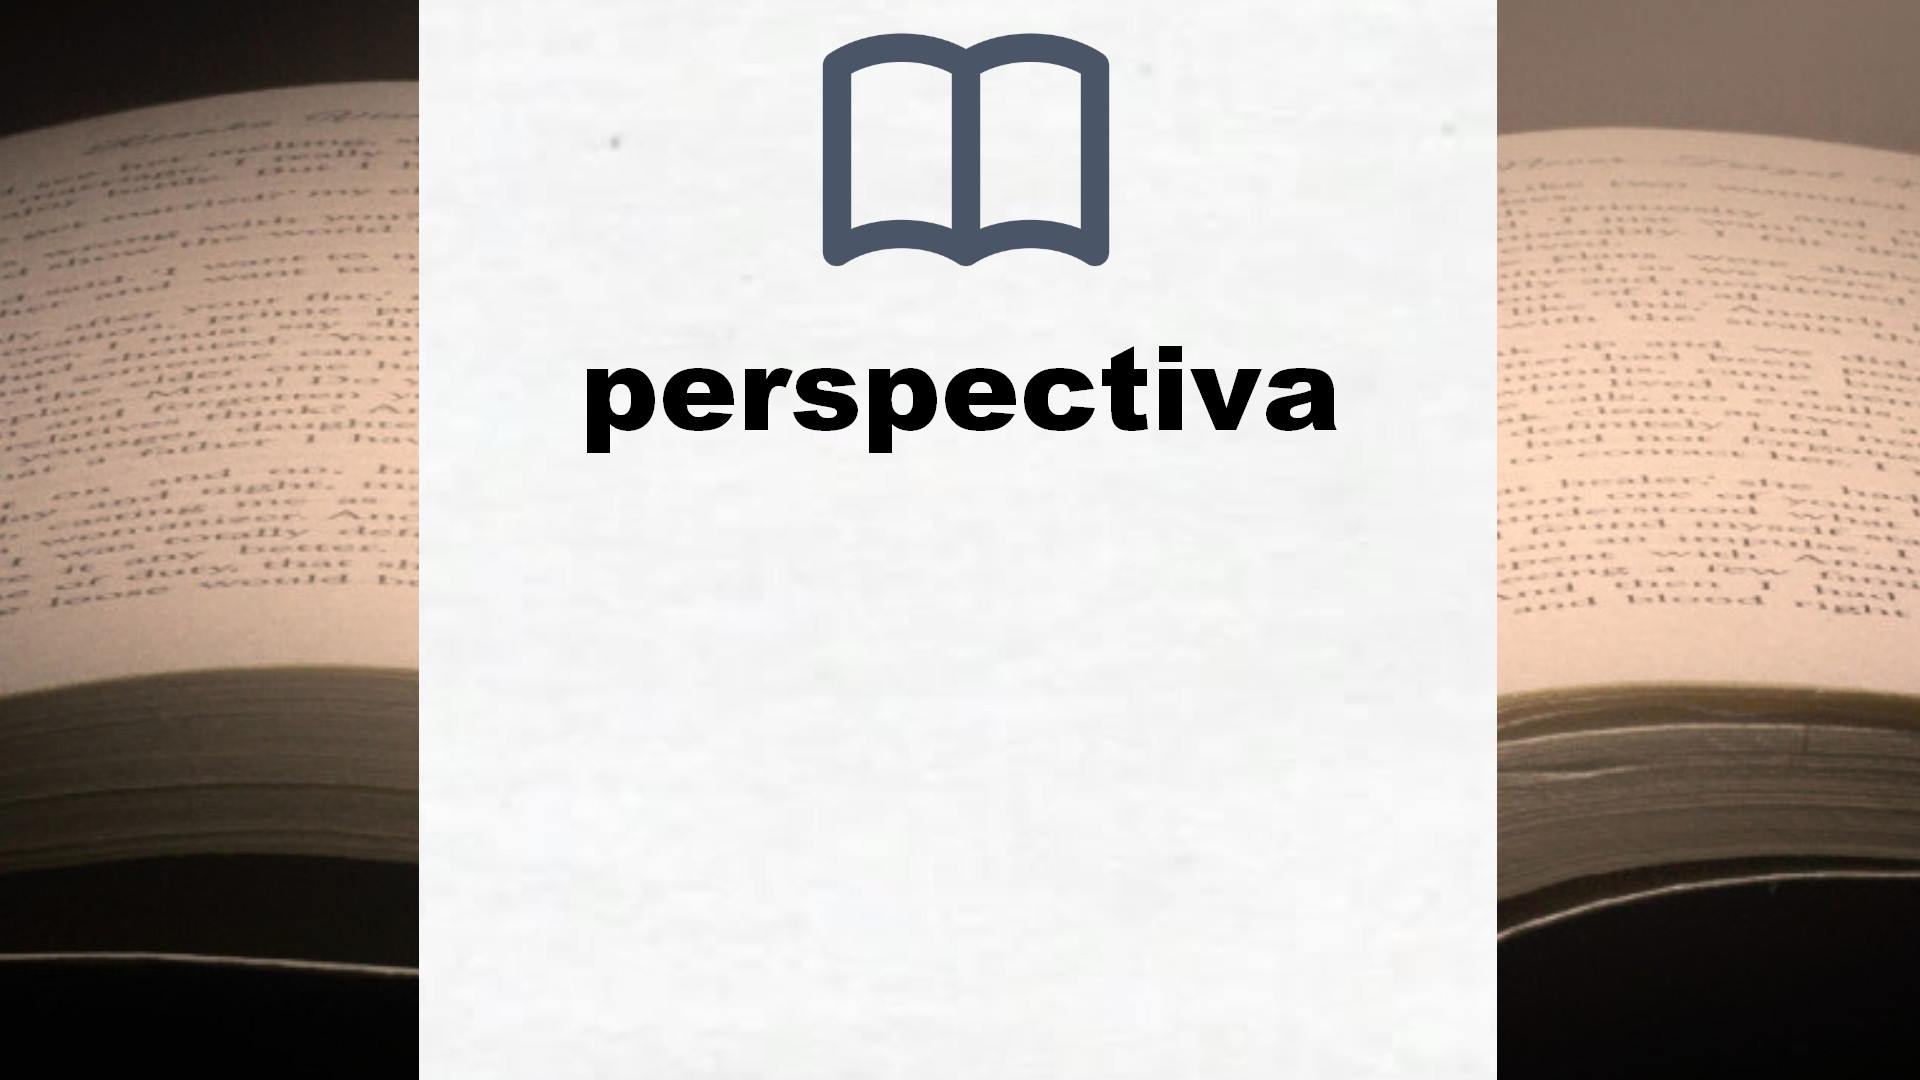 Libros sobre perspectiva